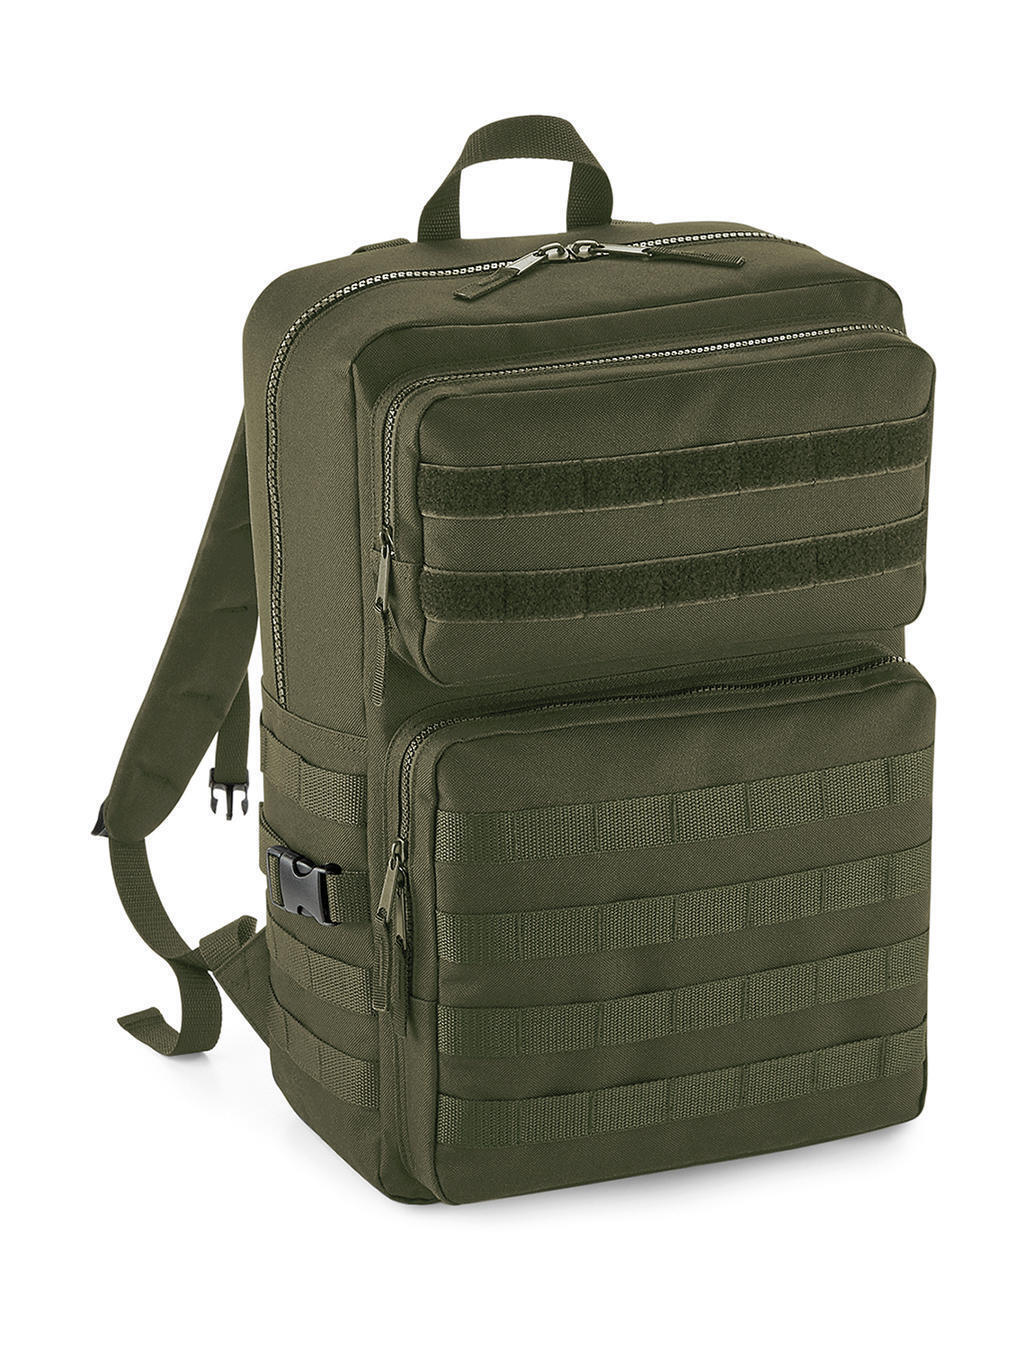 gruen_MOLLE_Tactical_Backpack